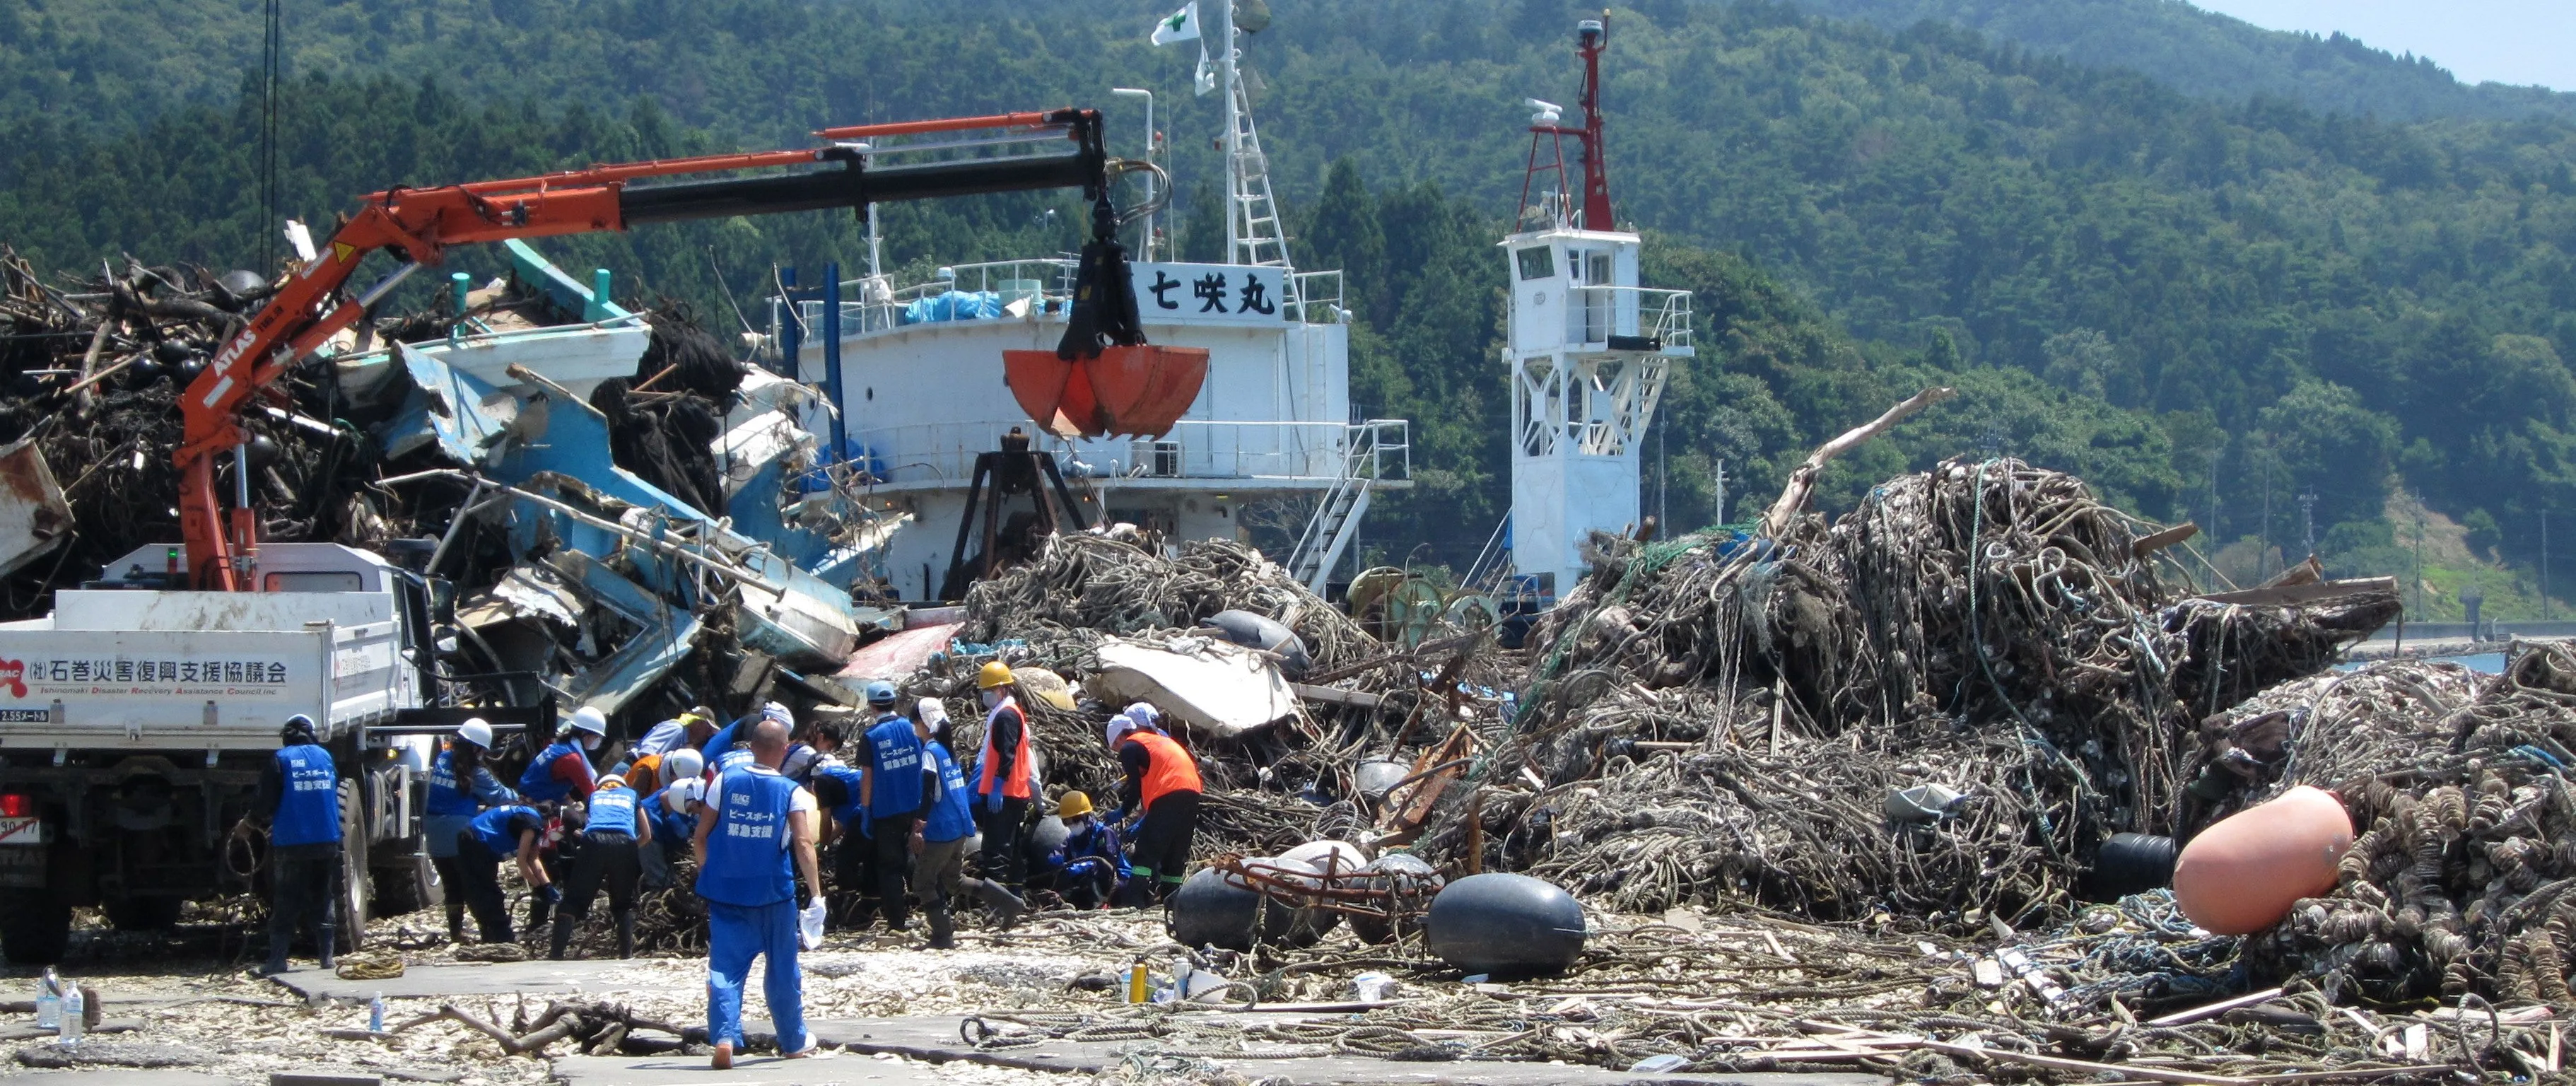 Japan, Ishinomaki, Koamikura-hama, Koamikurahama, ropes, mountains, tsunami, debris, 3.11, 2011, March 11, clean-up, recovery, efforts, volunteers, volunteering, piles